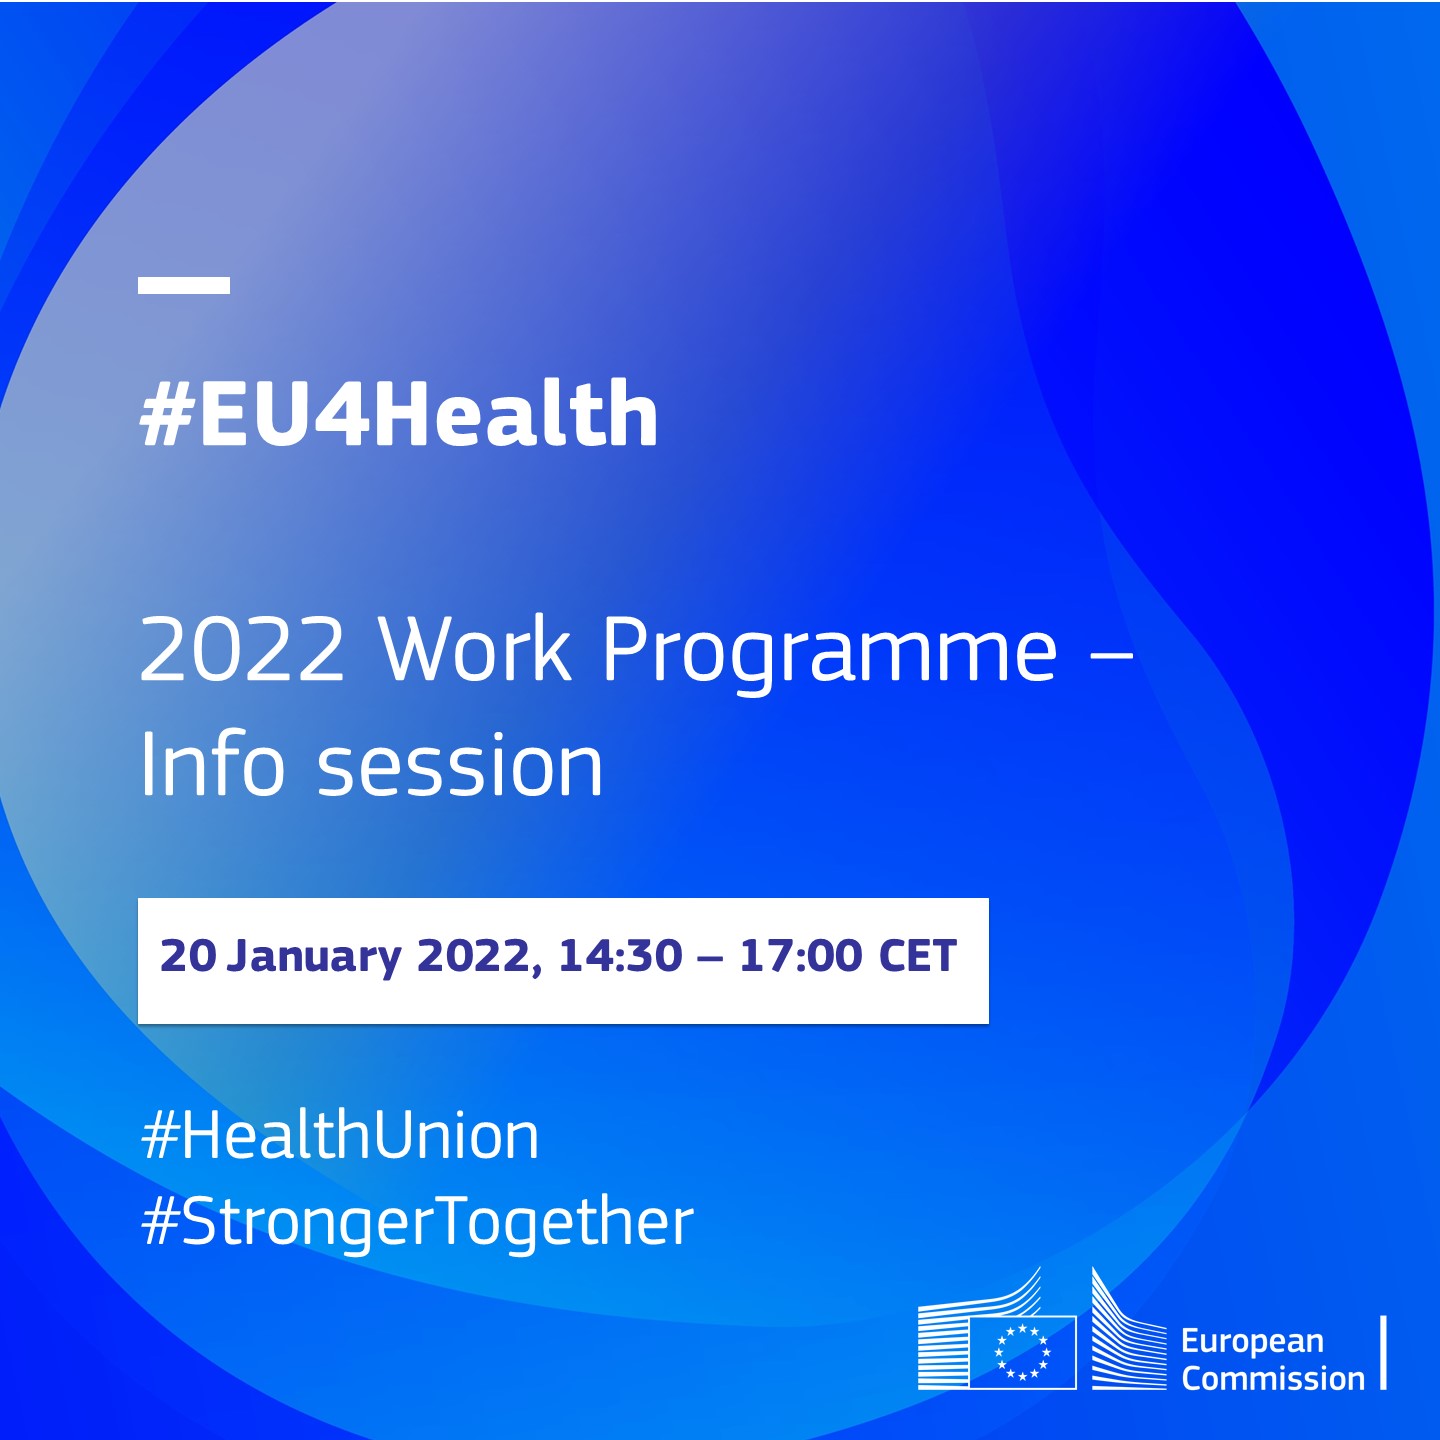 Info session 2022 EU4Health work programme